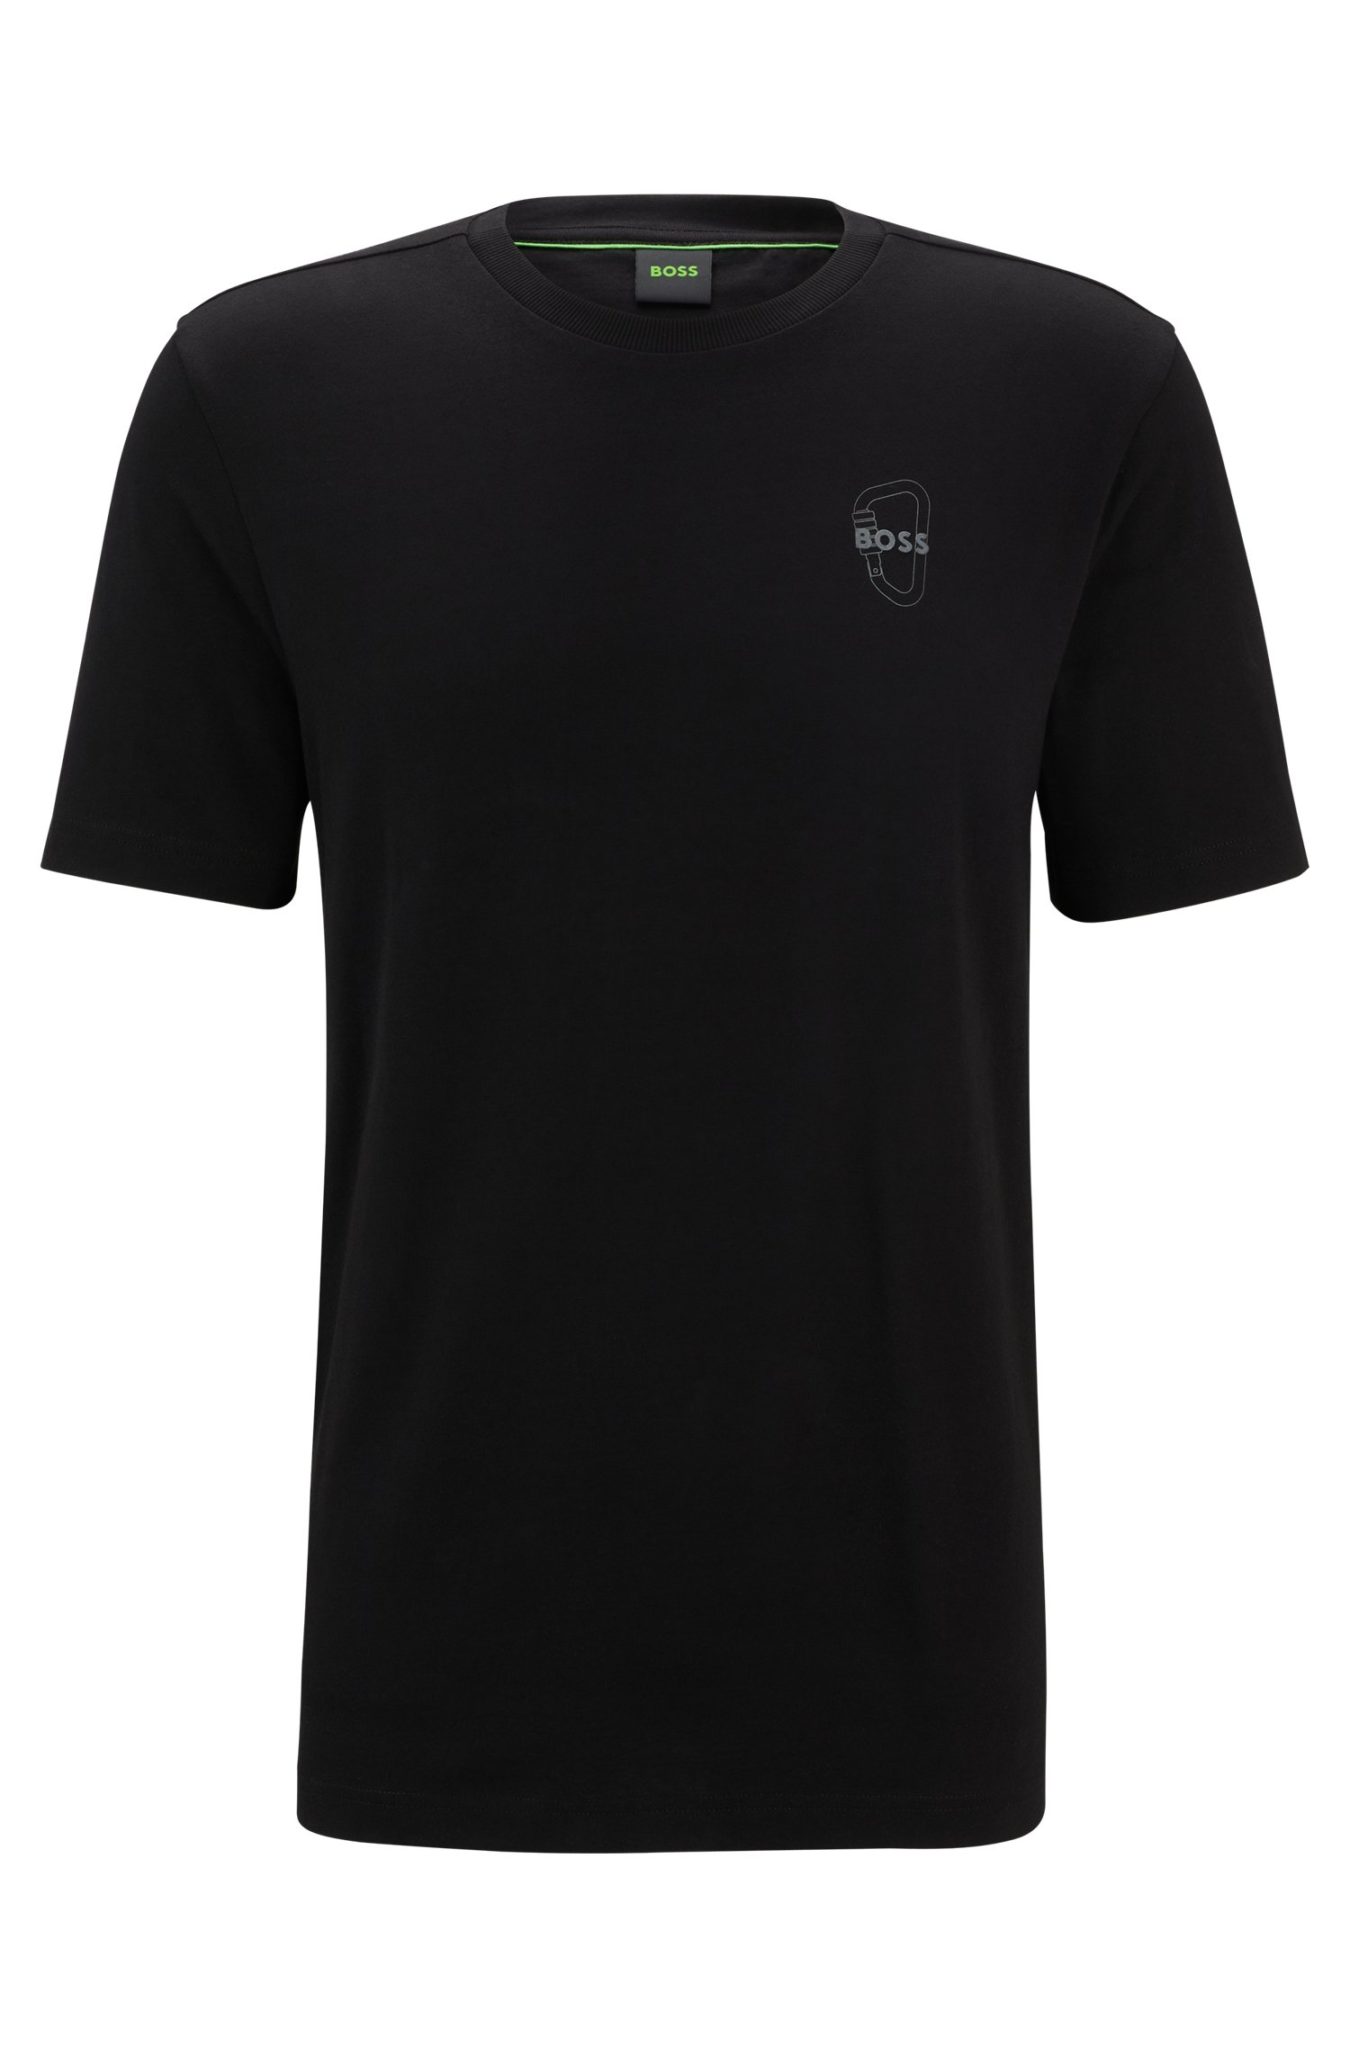 Hugo Boss T-shirt Regular en jersey de coton avec motif artistique mousqueton